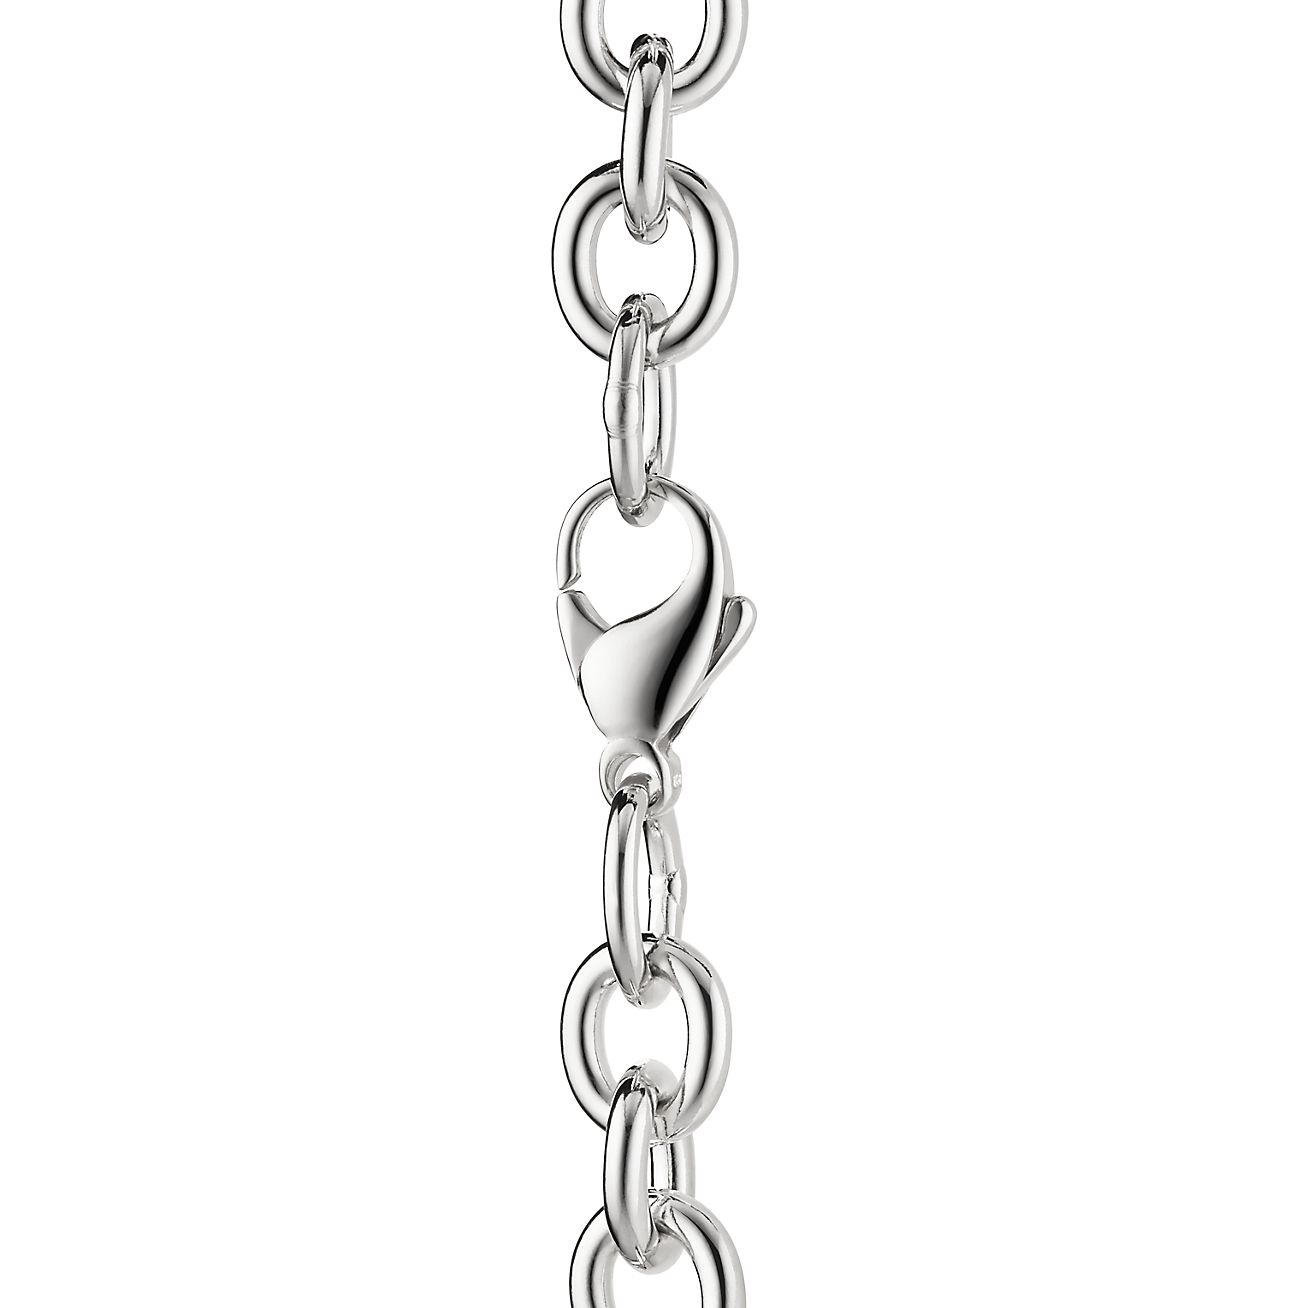 Return to Tiffany Lovestruck Heart Tag Bracelet in Silver, Medium, Size: Extra Small